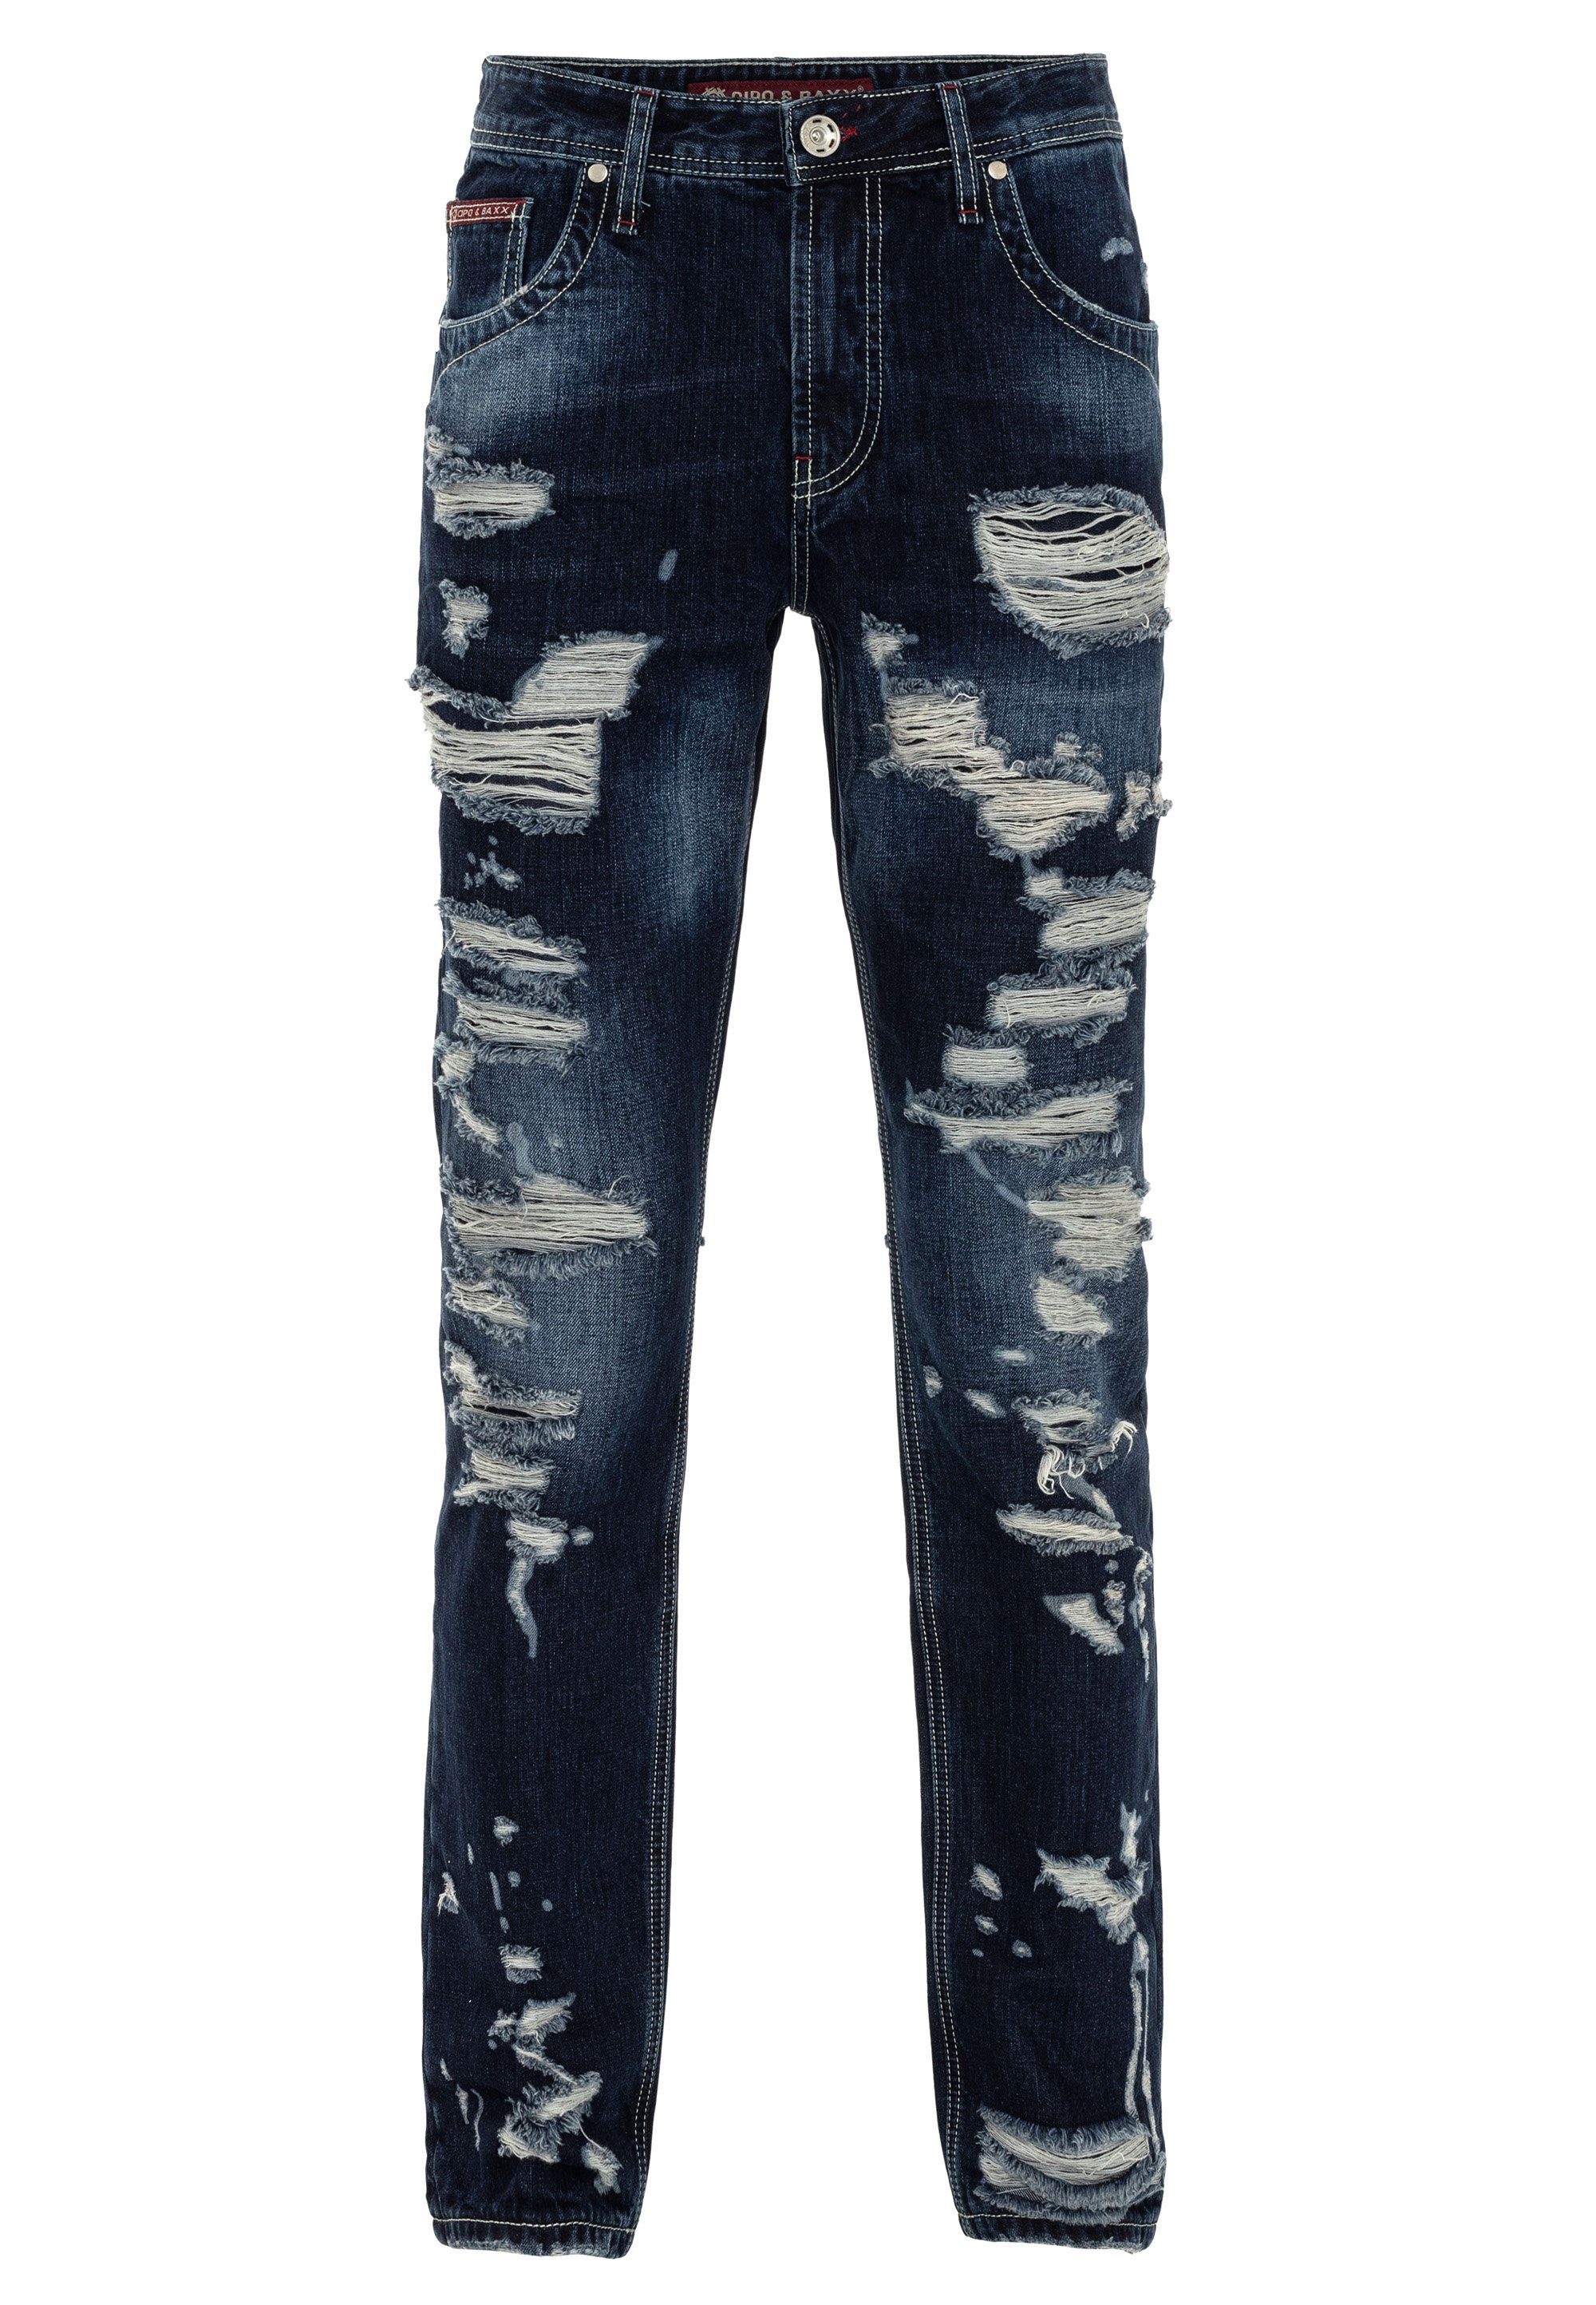 Cipo & coolen Jeans Destroyed-Look im Baxx dunkelblau Bequeme